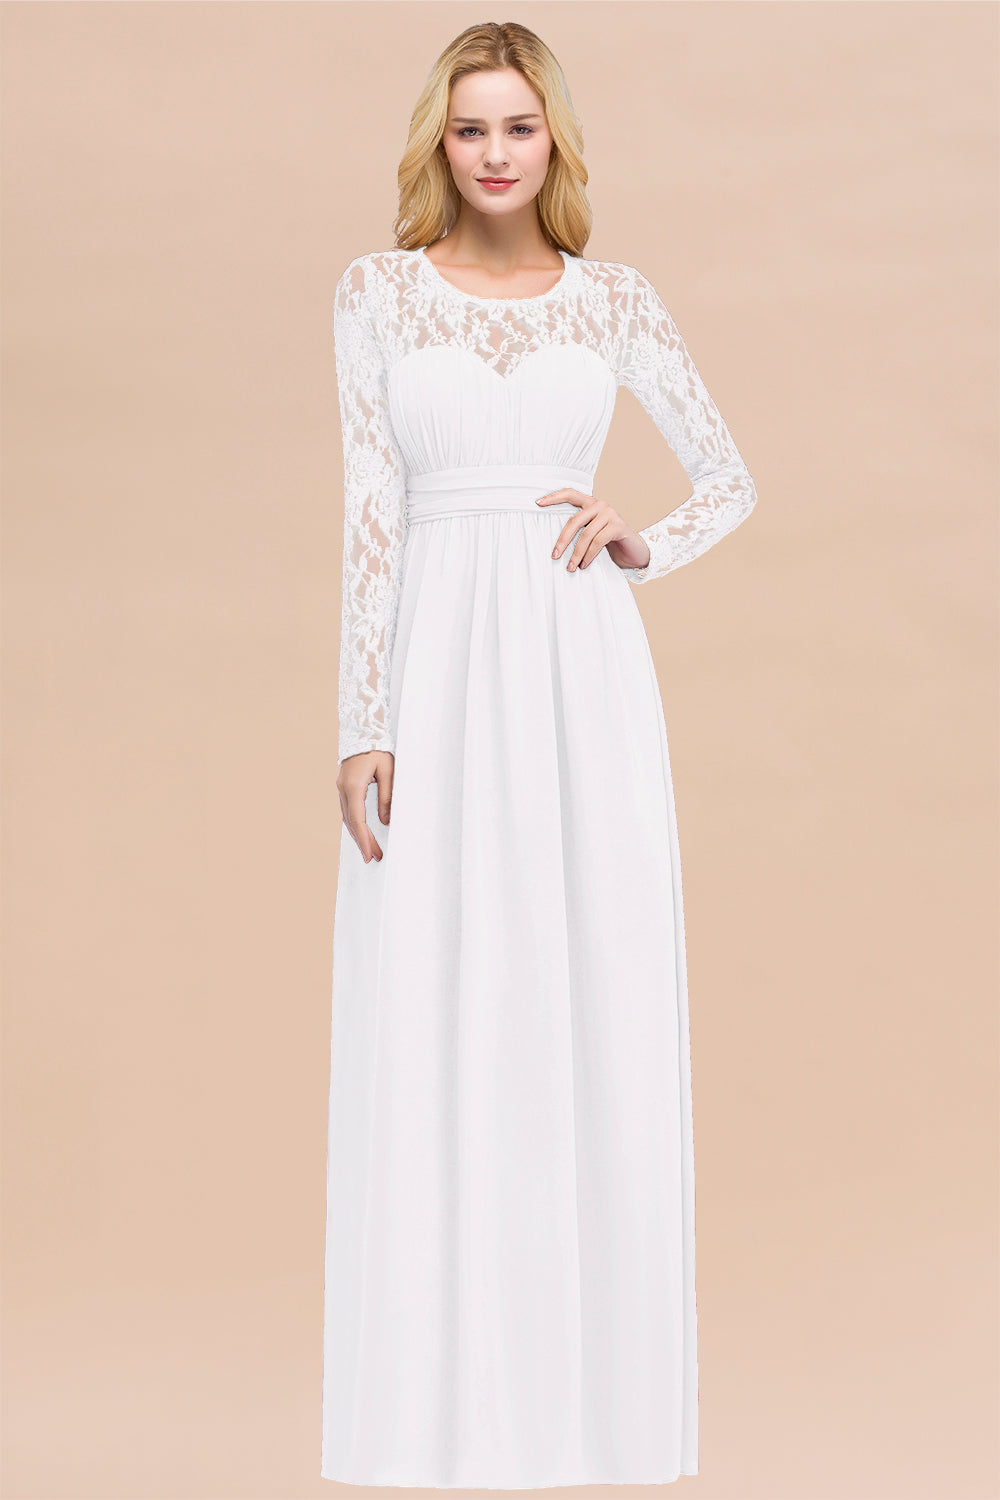 Elegant Lace Burgundy Bridesmaid Dresses Online with Long Sleeves-27dress